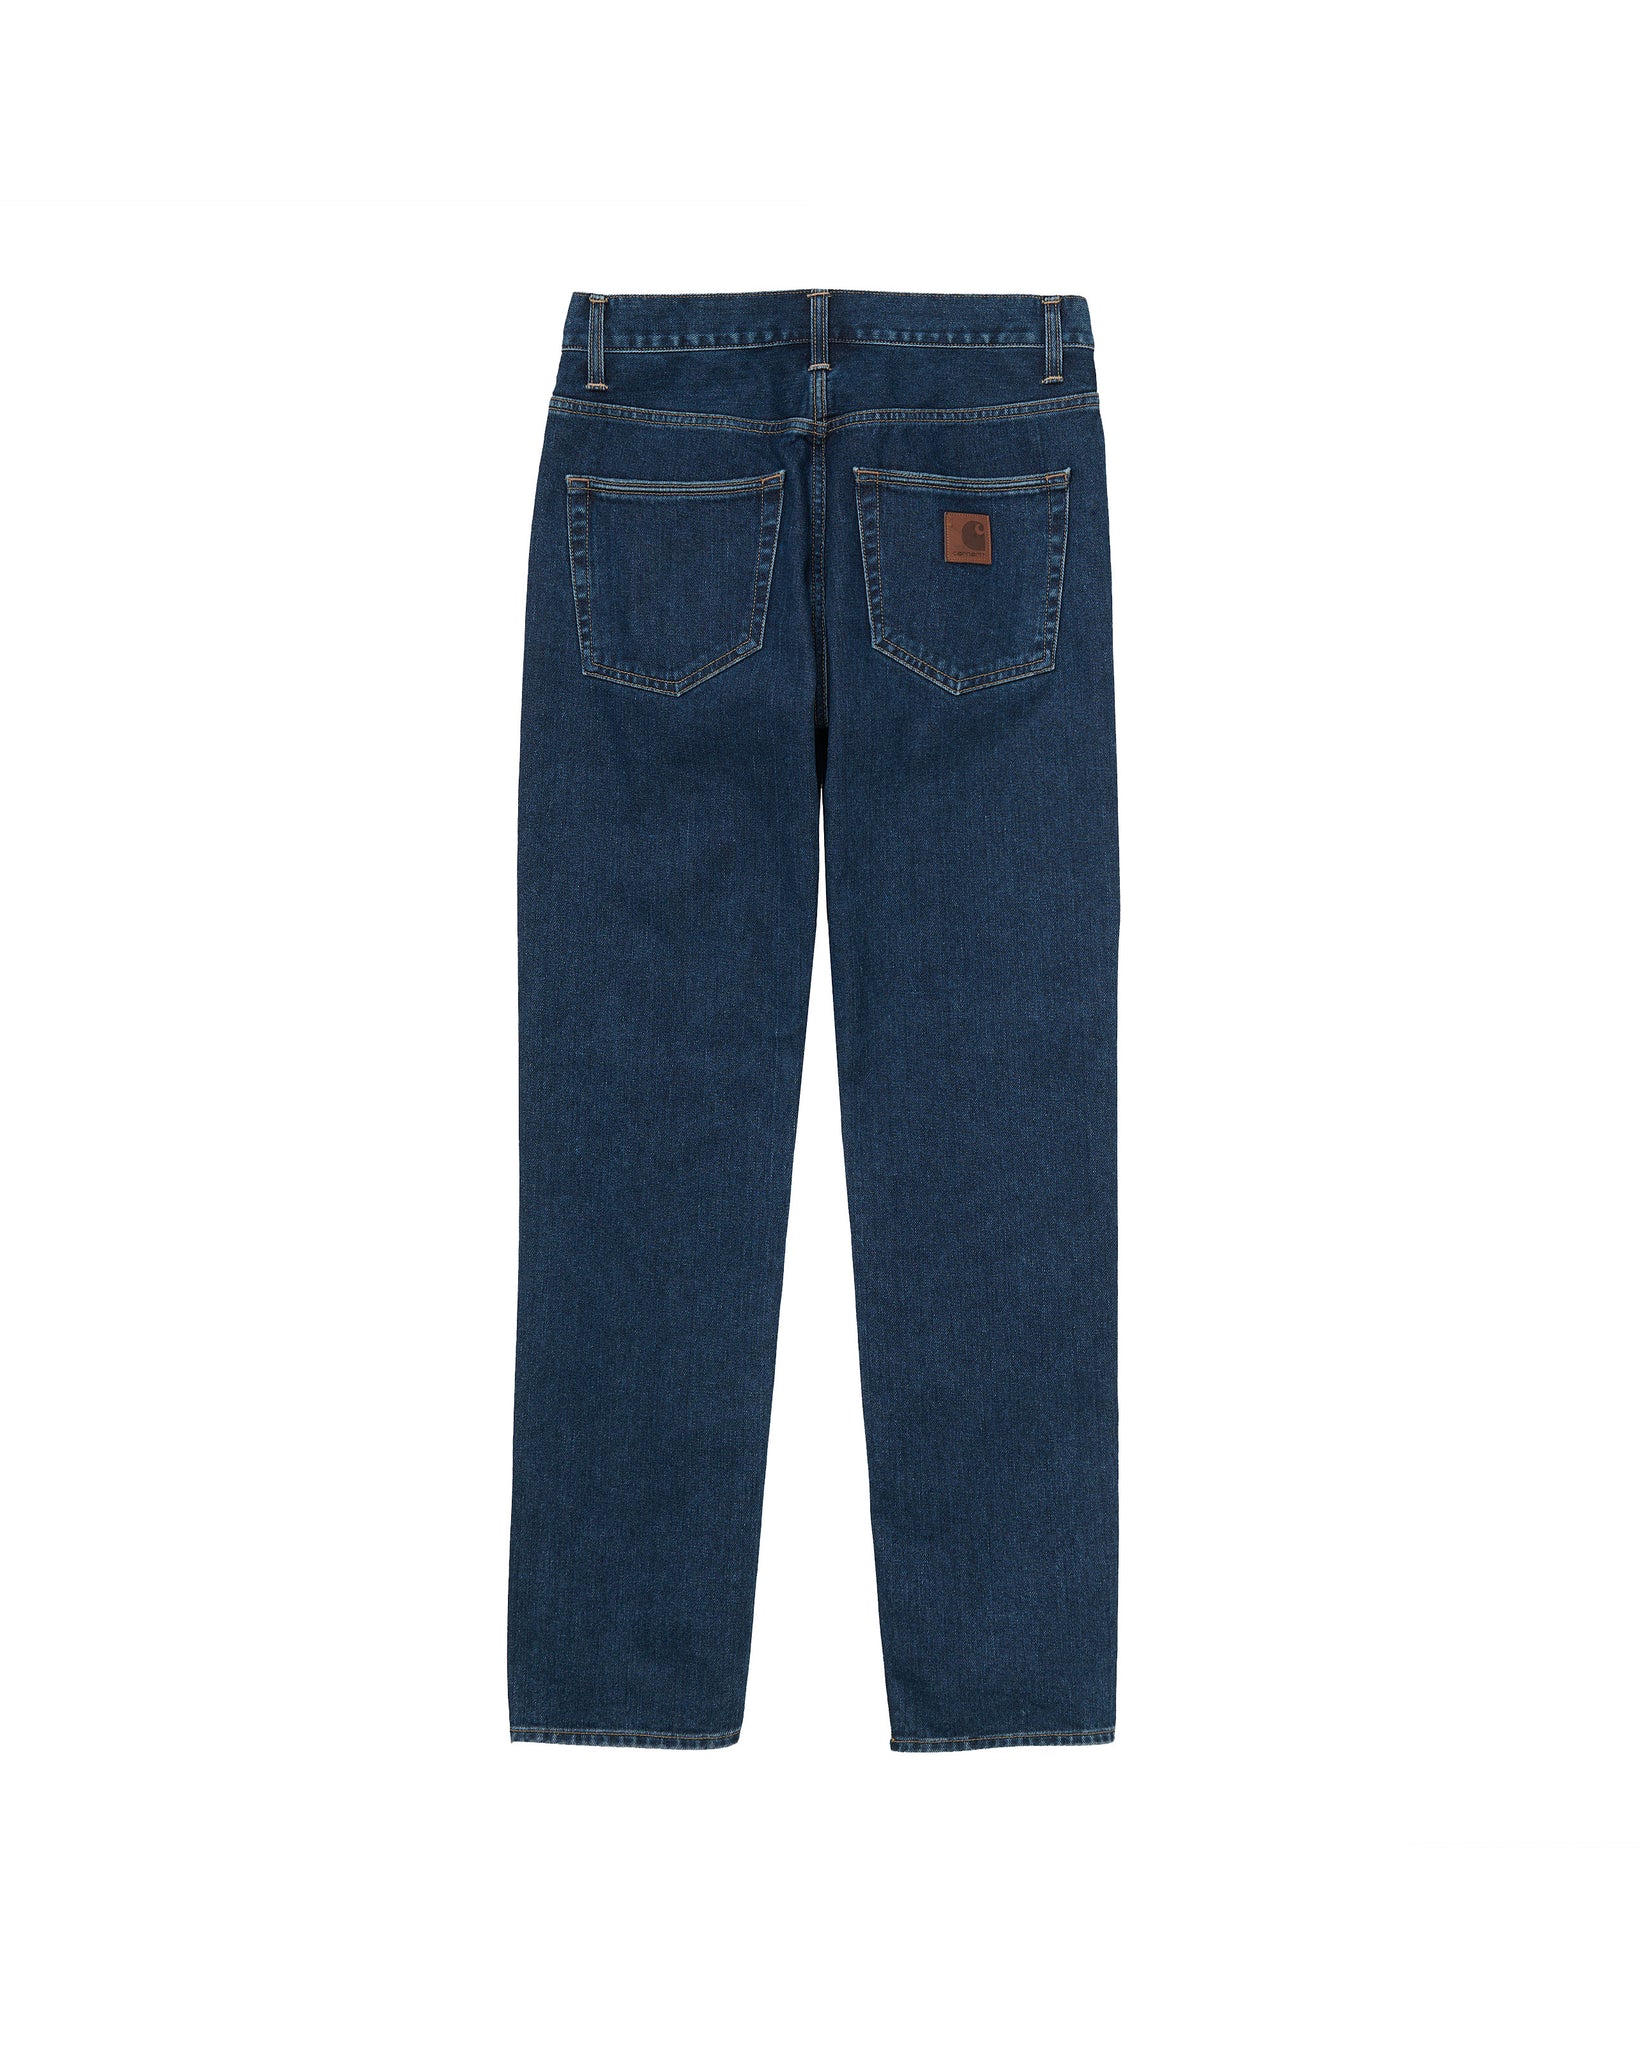 Klondike jeans - Blue (Stone washed)